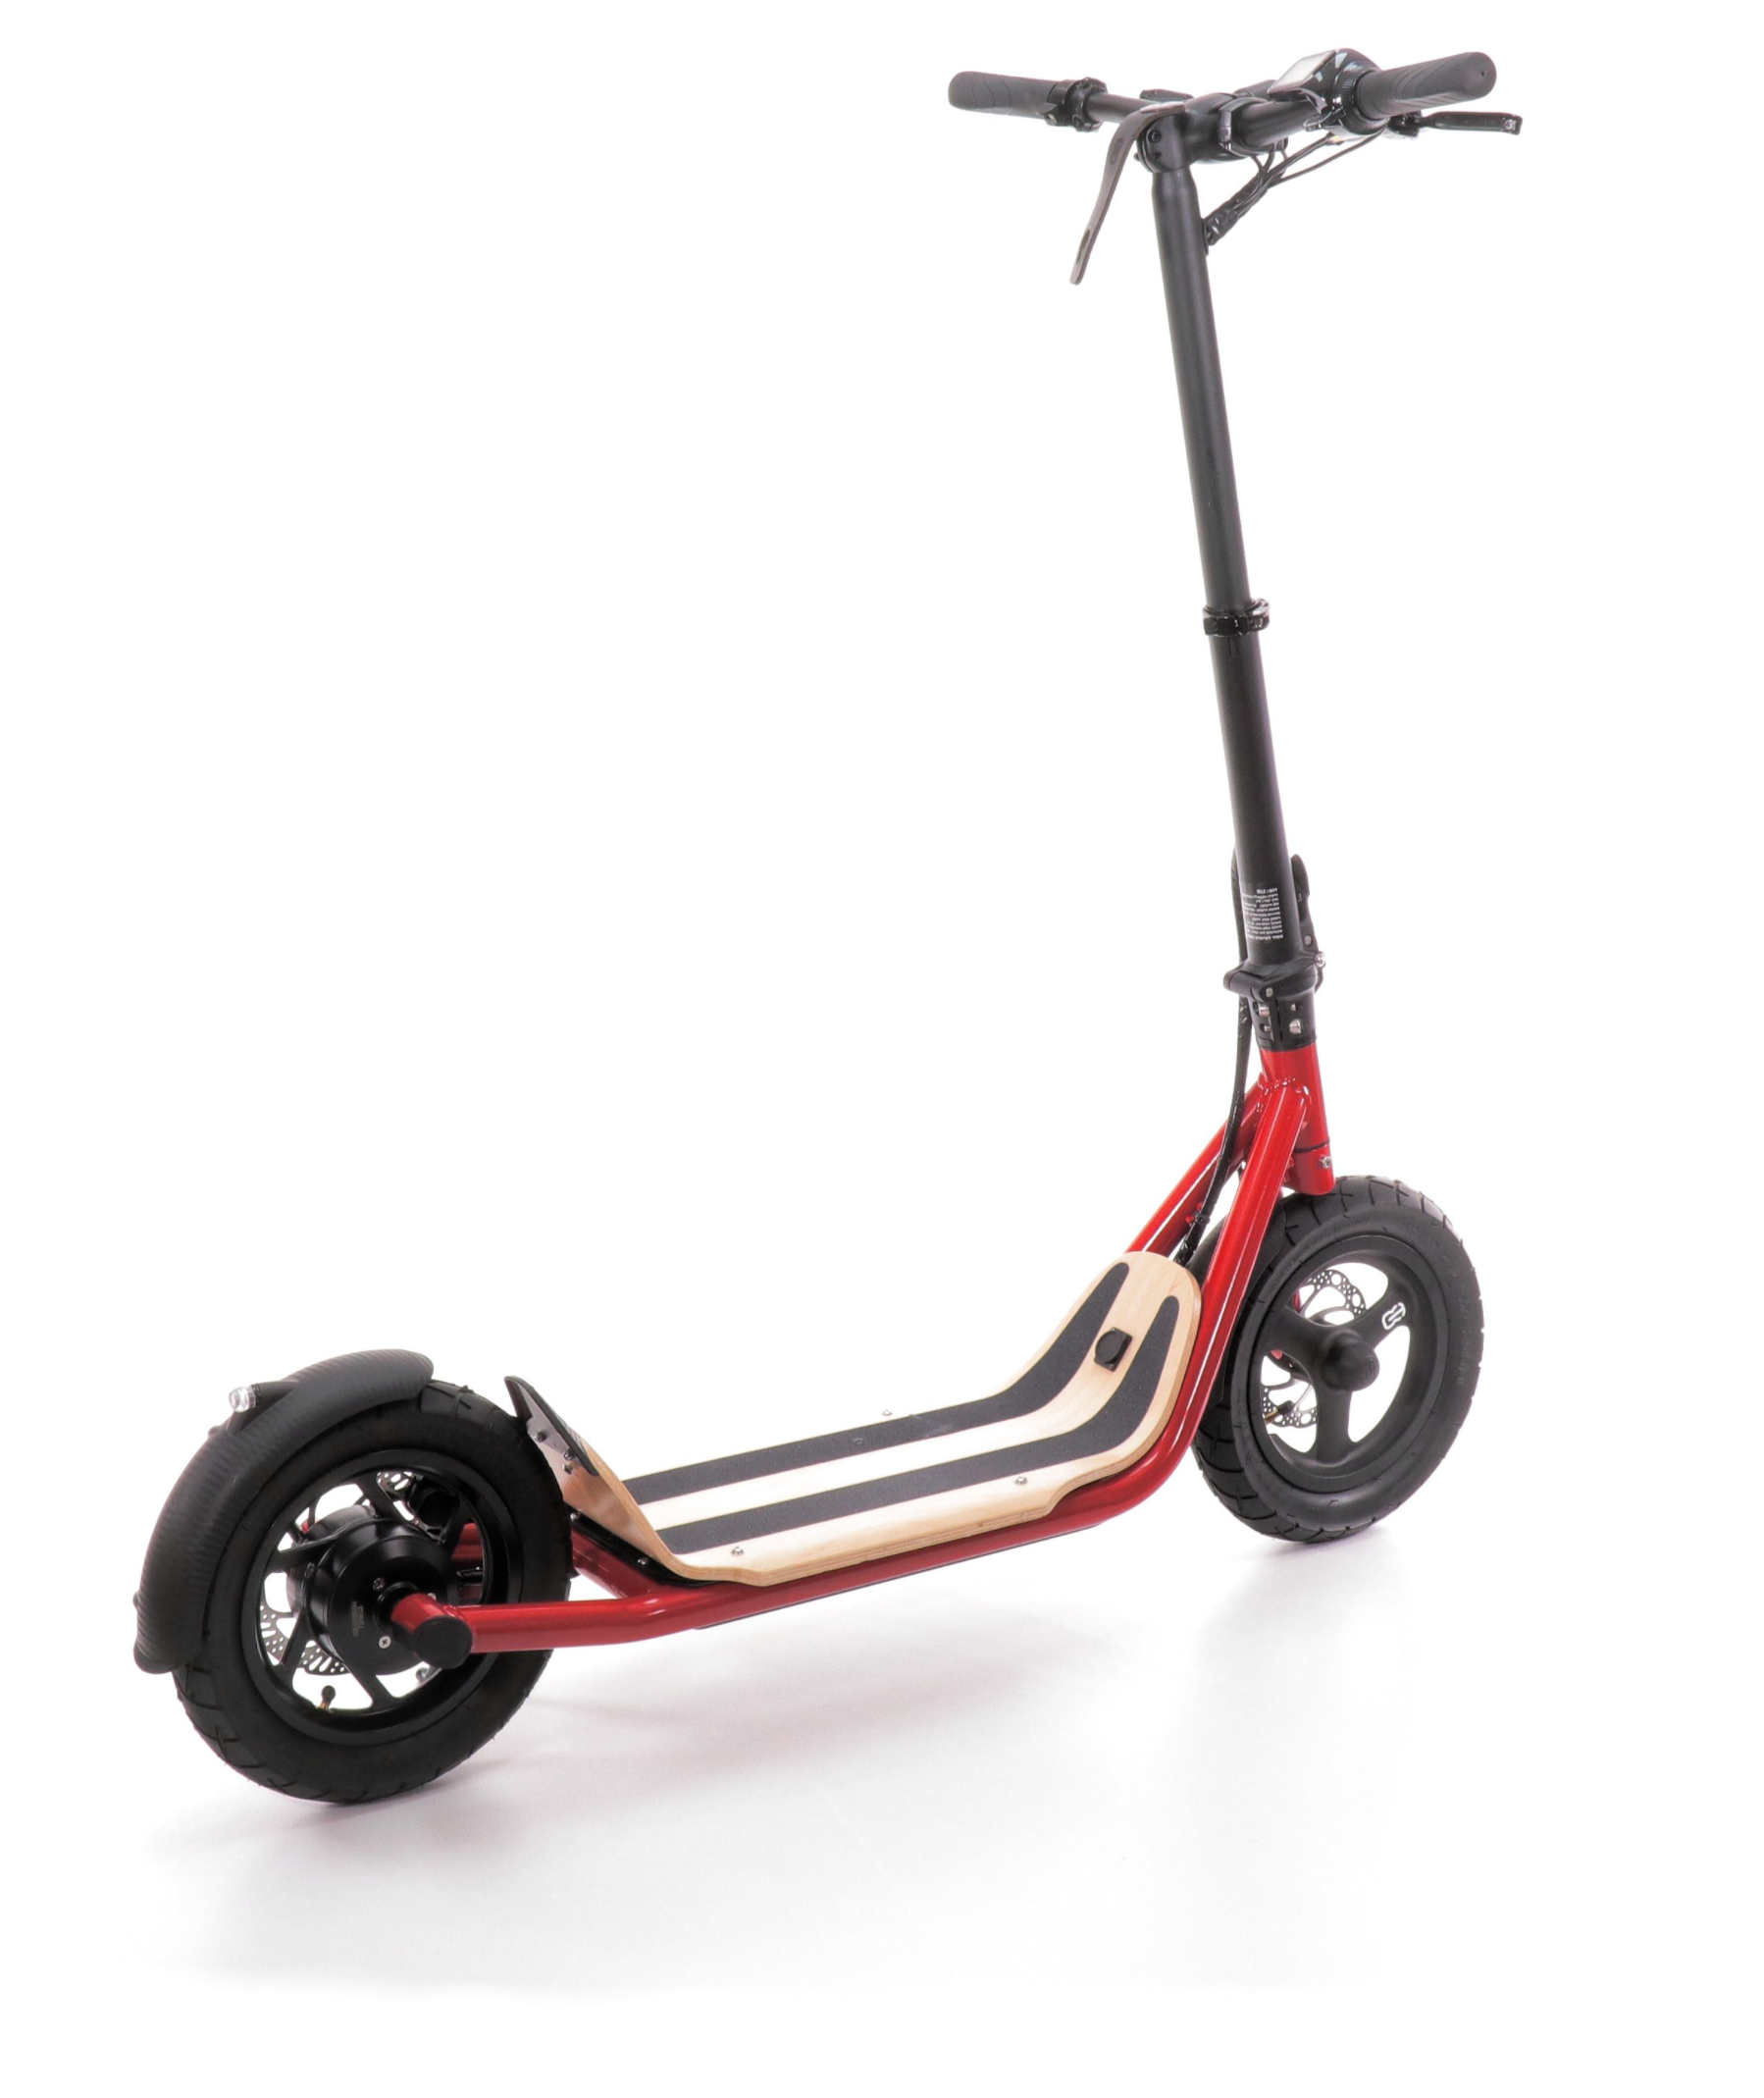 8Tev B12- Proxi Electric Scooter